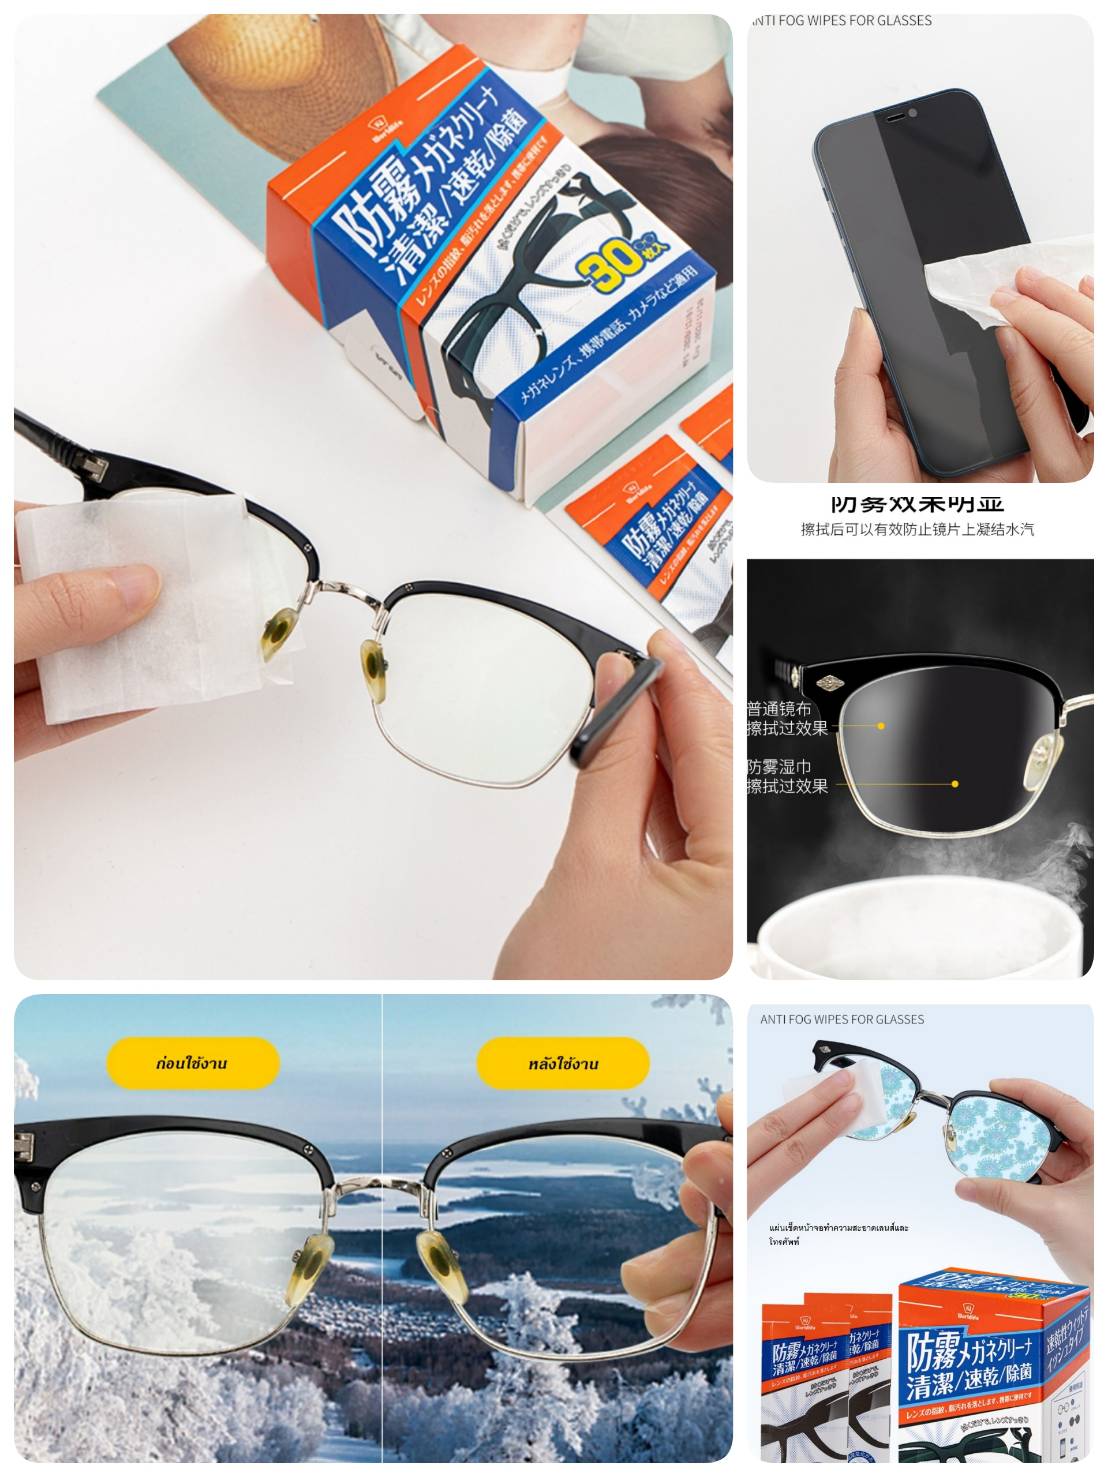 Worldlife Wipe lens แผ่นเช็ดทำความสะอาดเลนส์ใช้เช็ดทำความสะอาดแว่นตา แว่นตากันแดด หน้าจอSmartphone ขจัดคราบ ลบสิ่งสกปรก